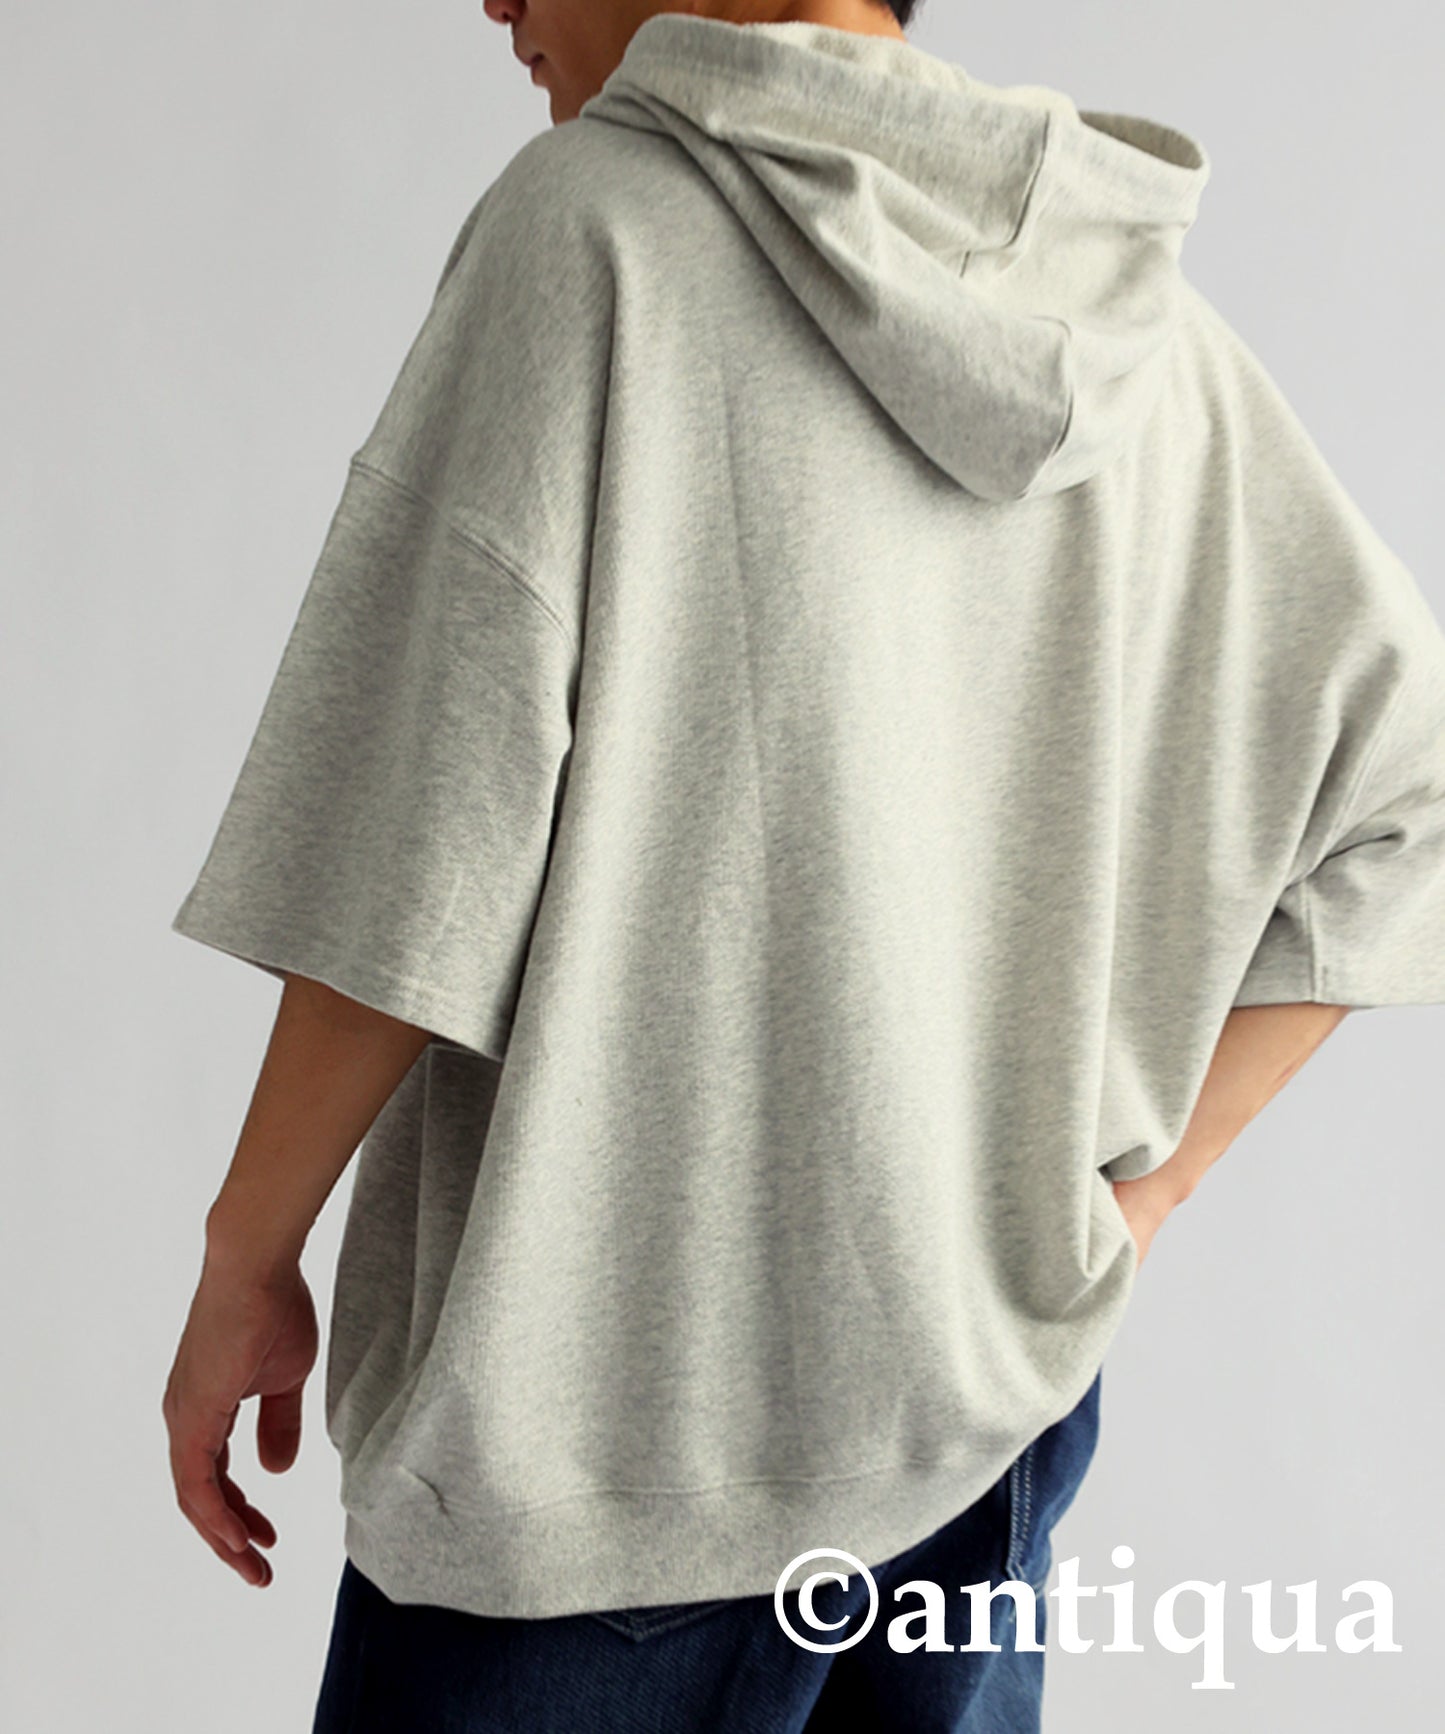 Pile Fabric Hoodie Pullover Men's